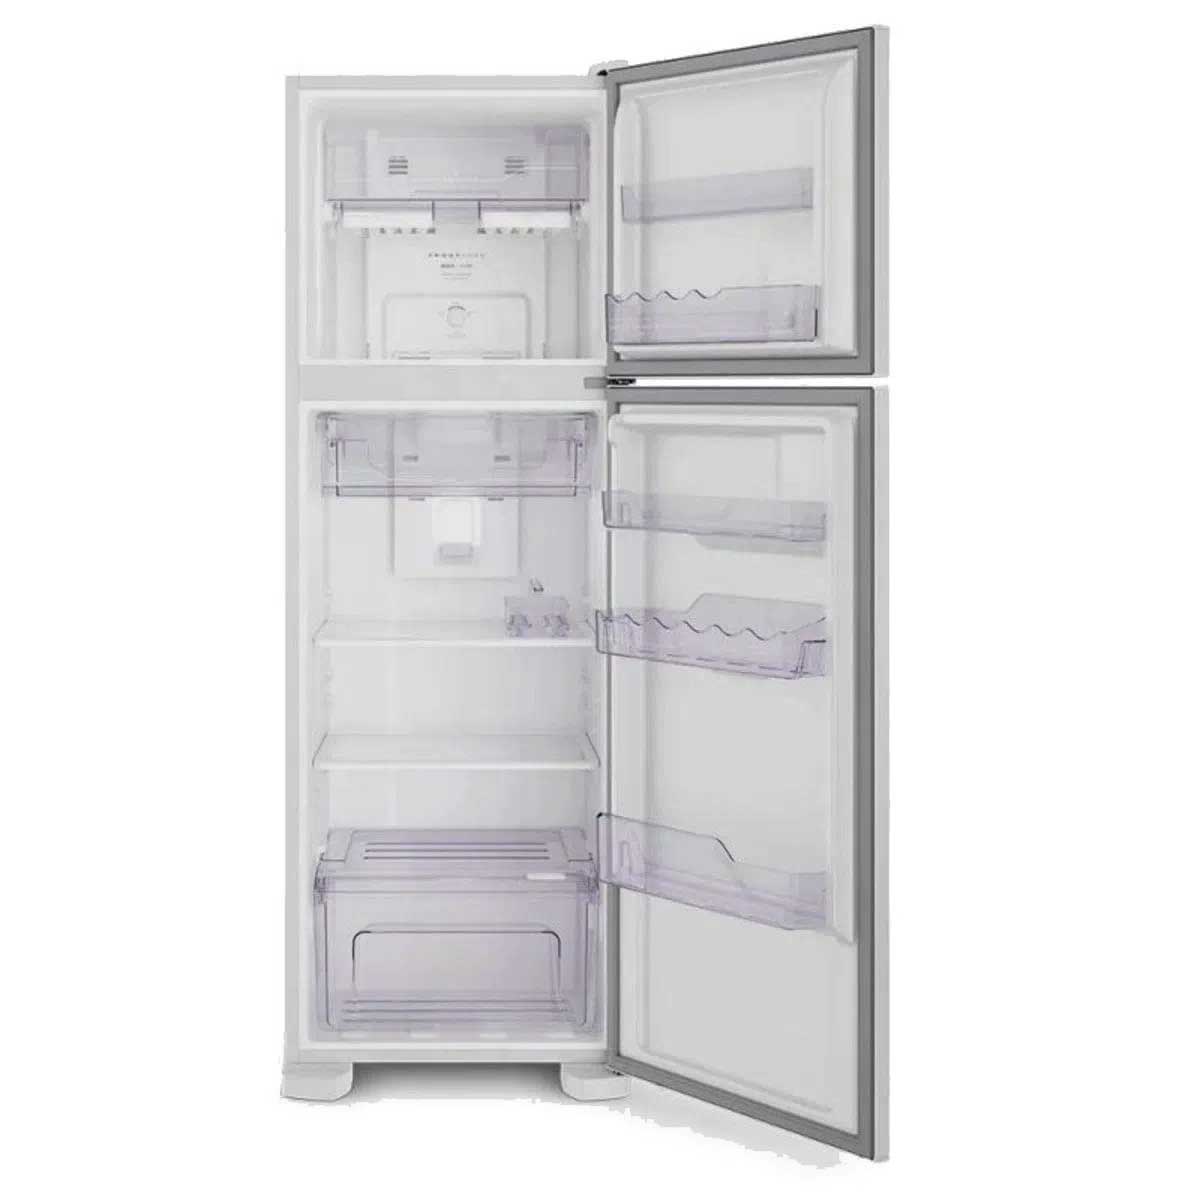 geladeira-electrolux-frost-free-duplex-2-portas-dfn41-371-litros-branco-110v-3.jpg